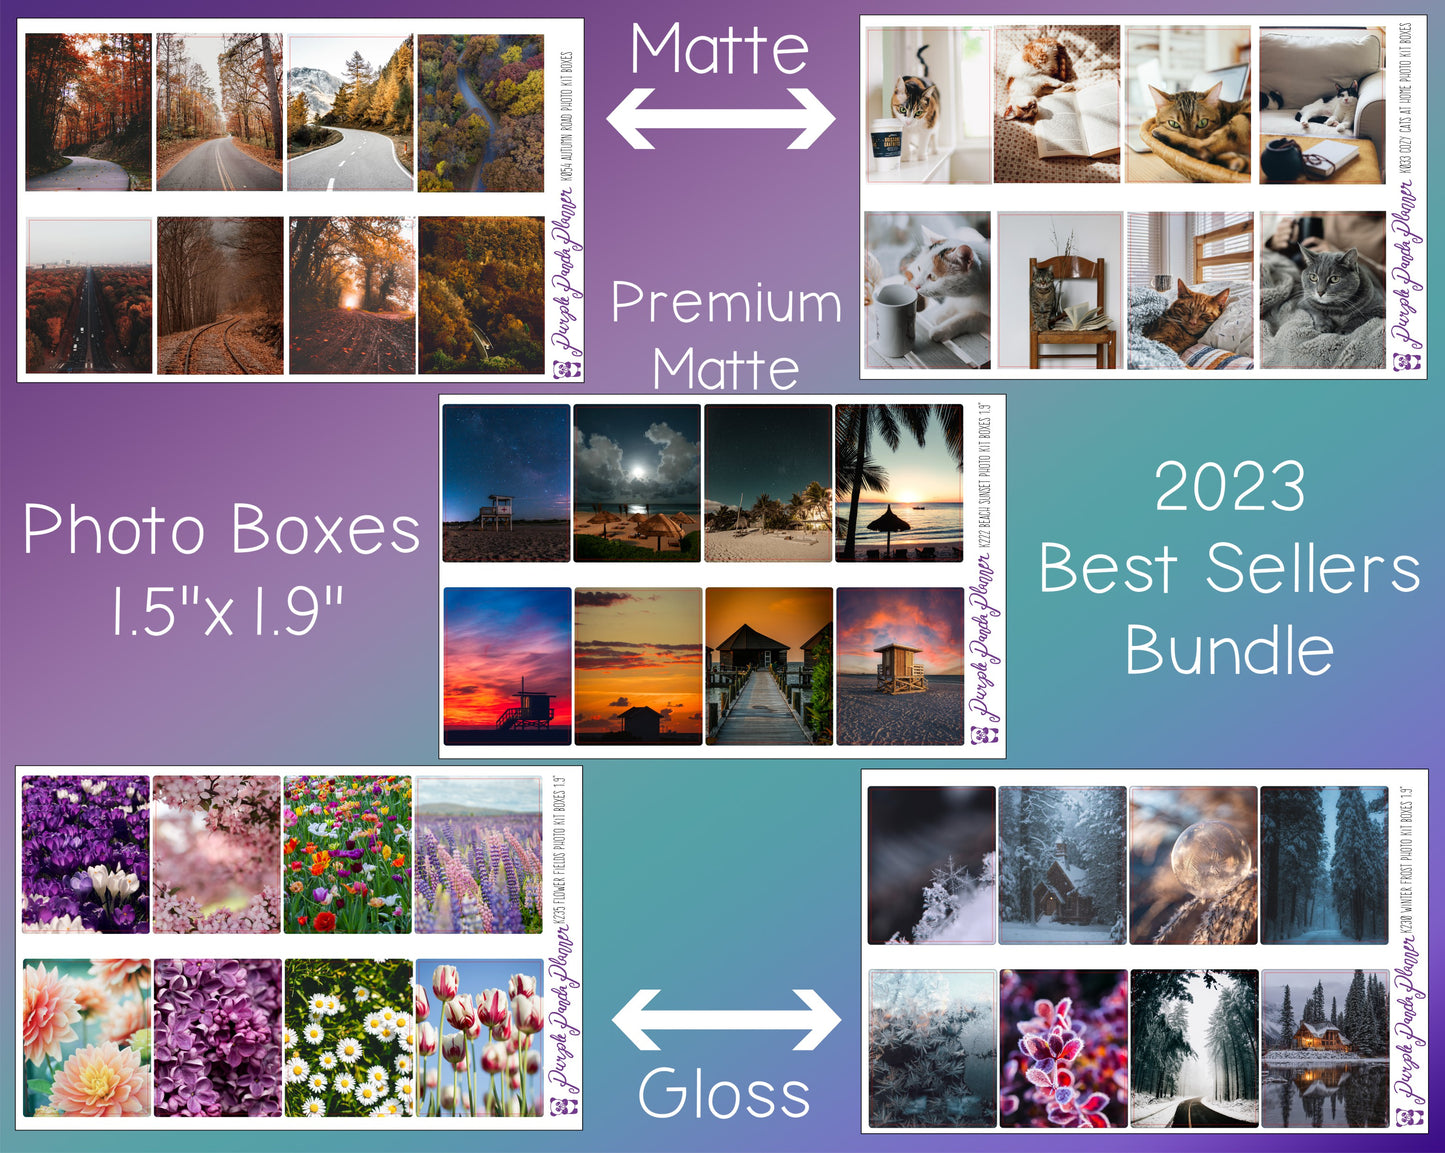 2023 Best Sellers Bundle Photo Boxes